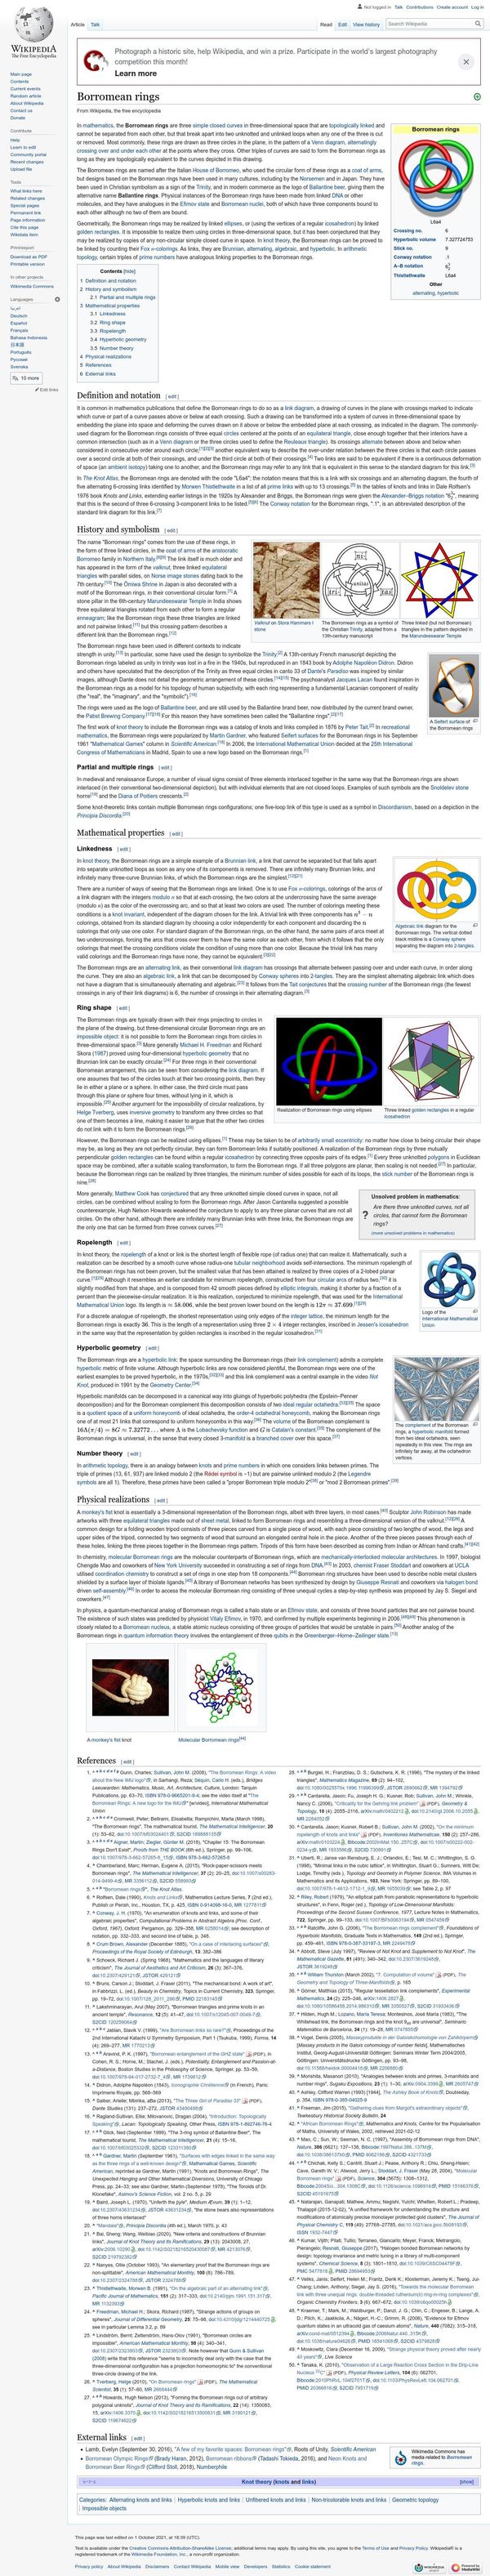 Borromean rings - Wikipedia